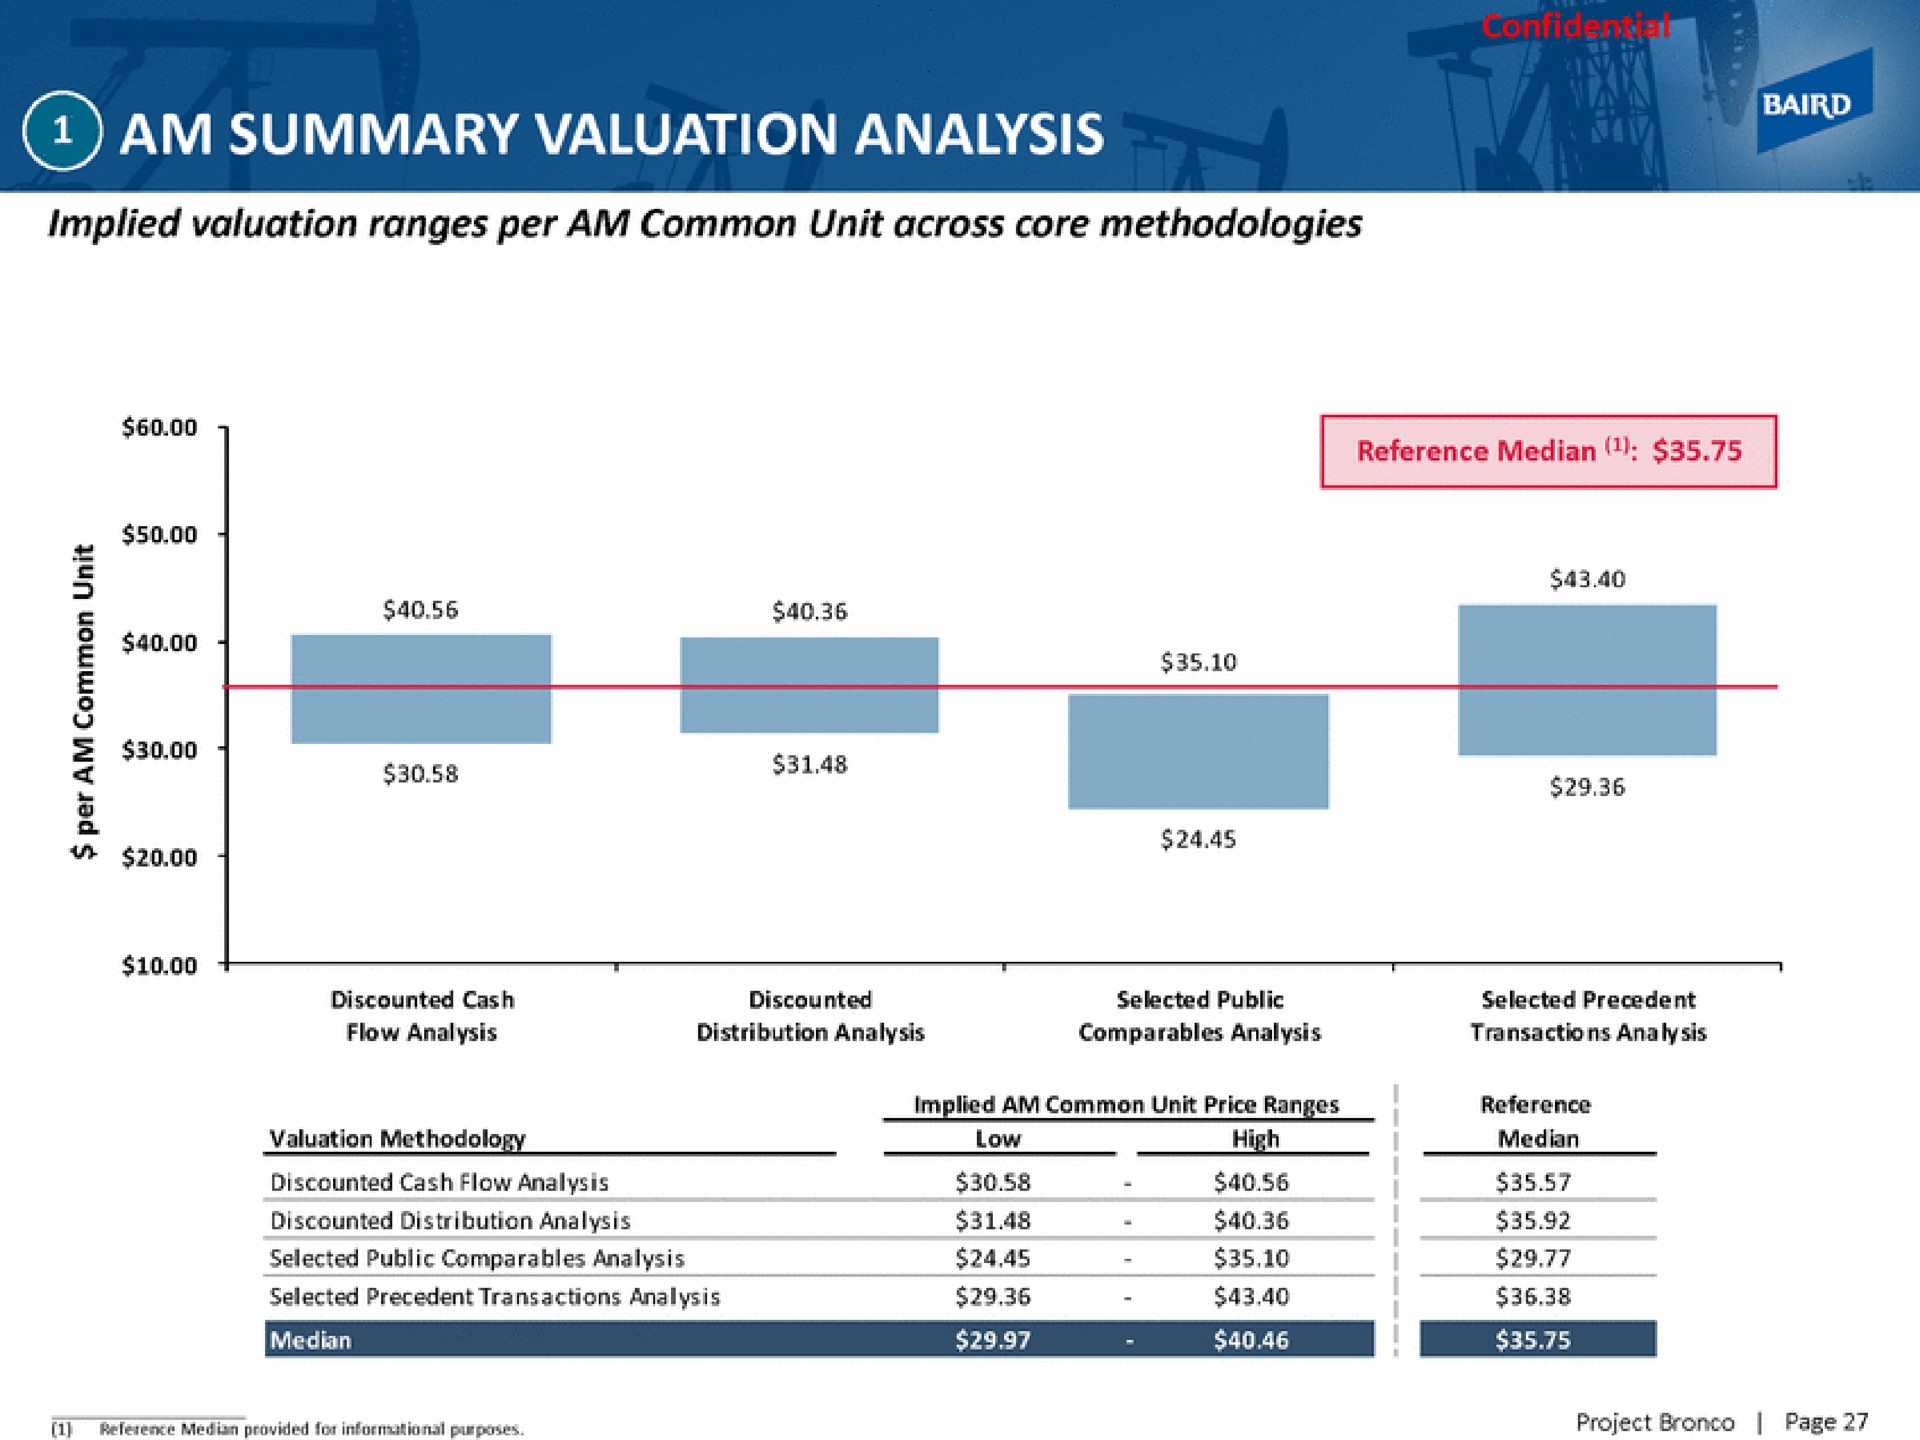 am summary valuation analysis | Baird